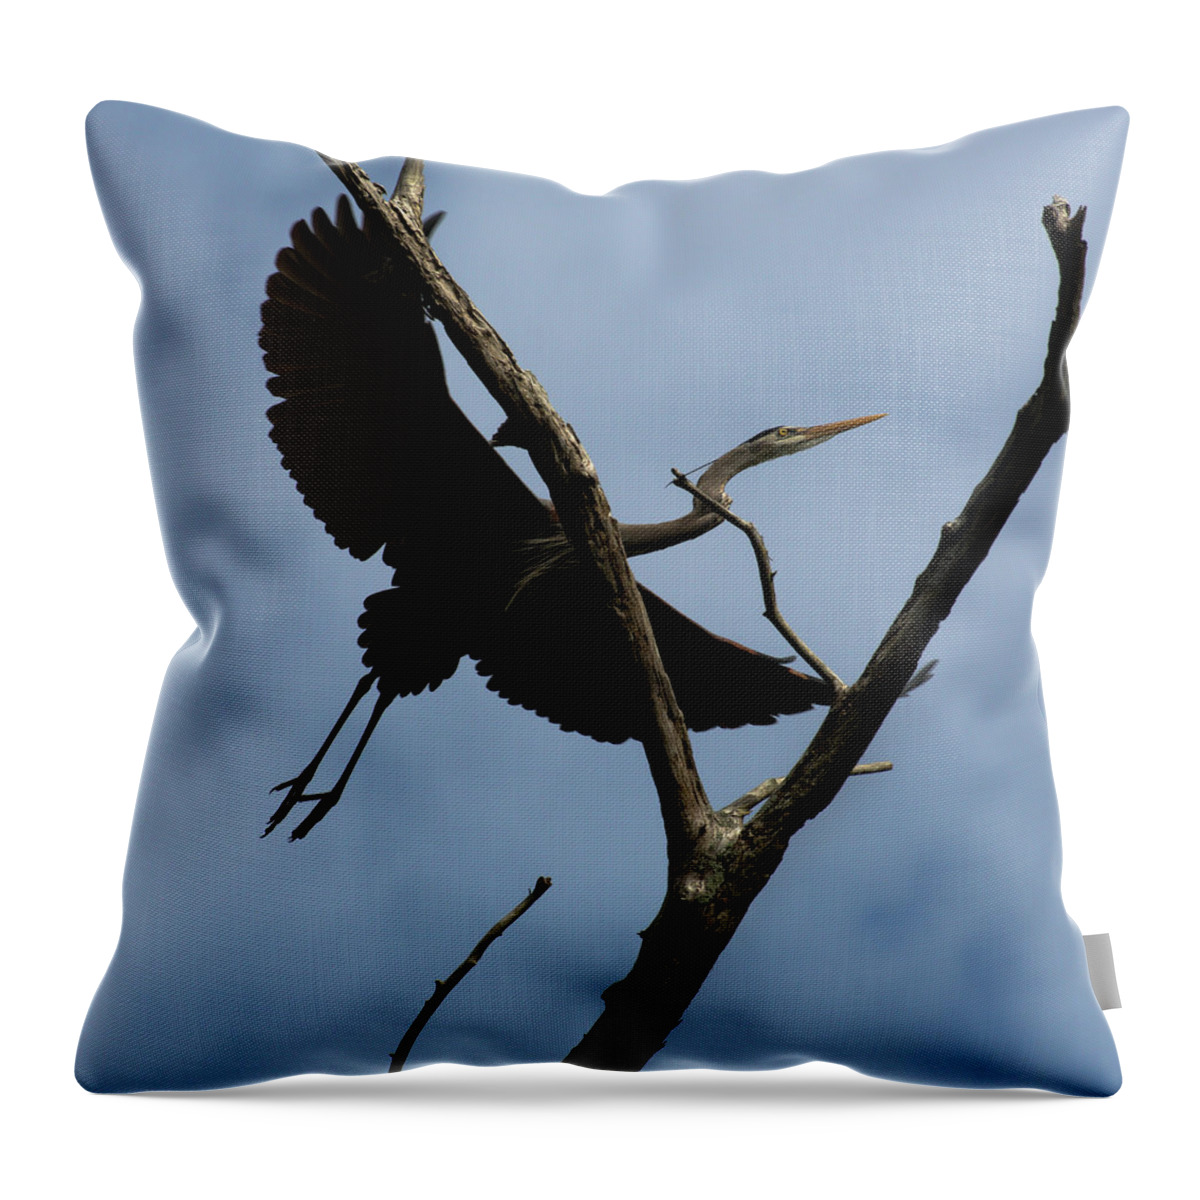 Blue Heron Throw Pillow featuring the photograph Heron Flight by Dillon Kalkhurst